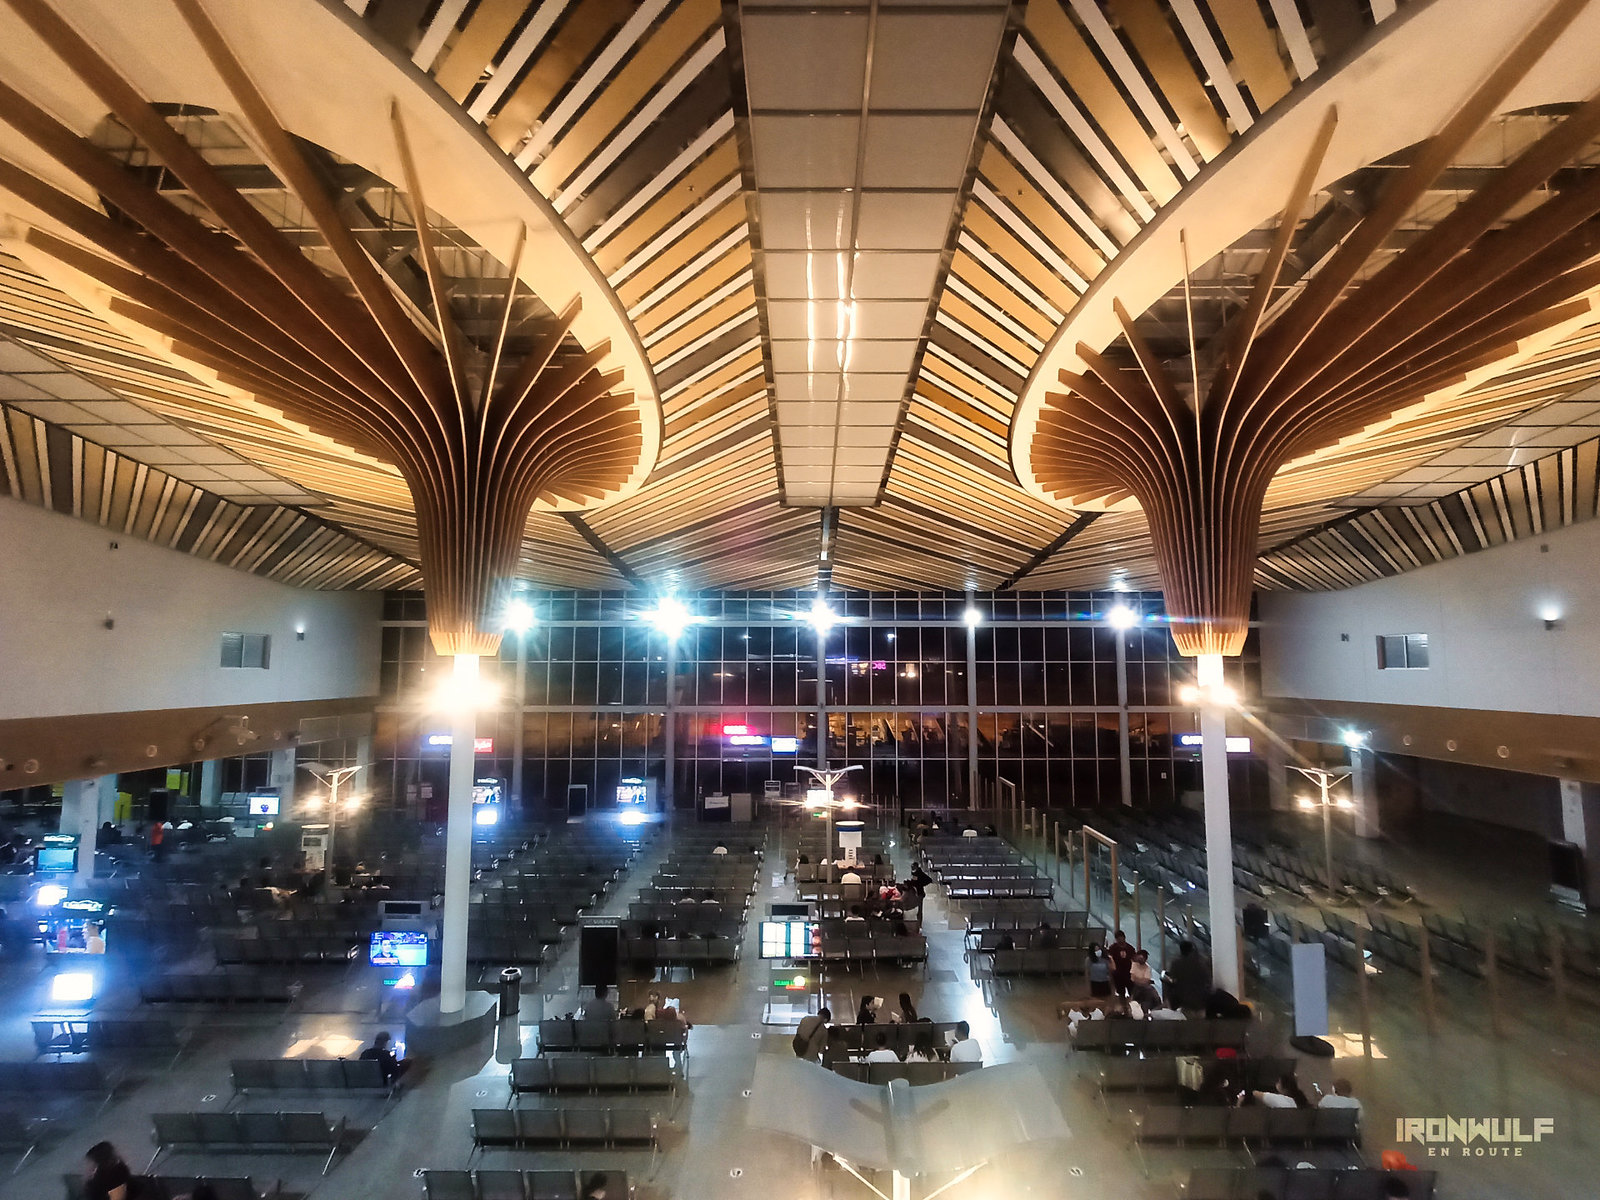 Puerto Princesa Airport